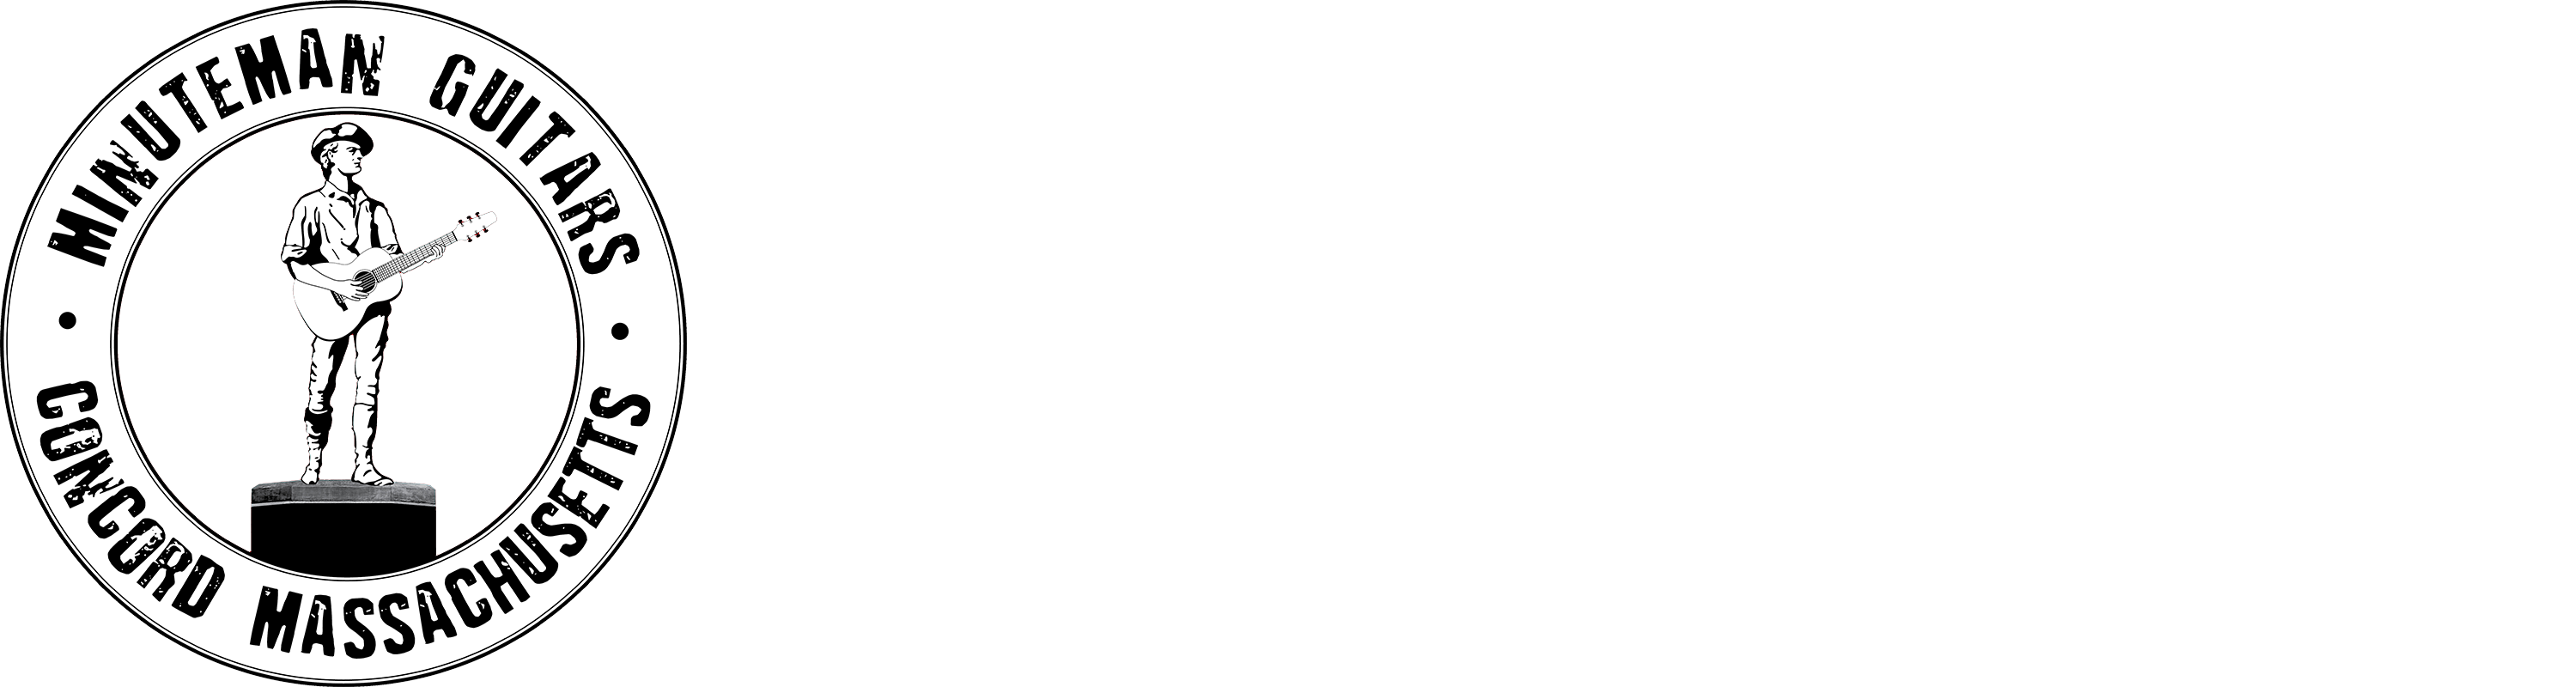 Minuteman Guitars